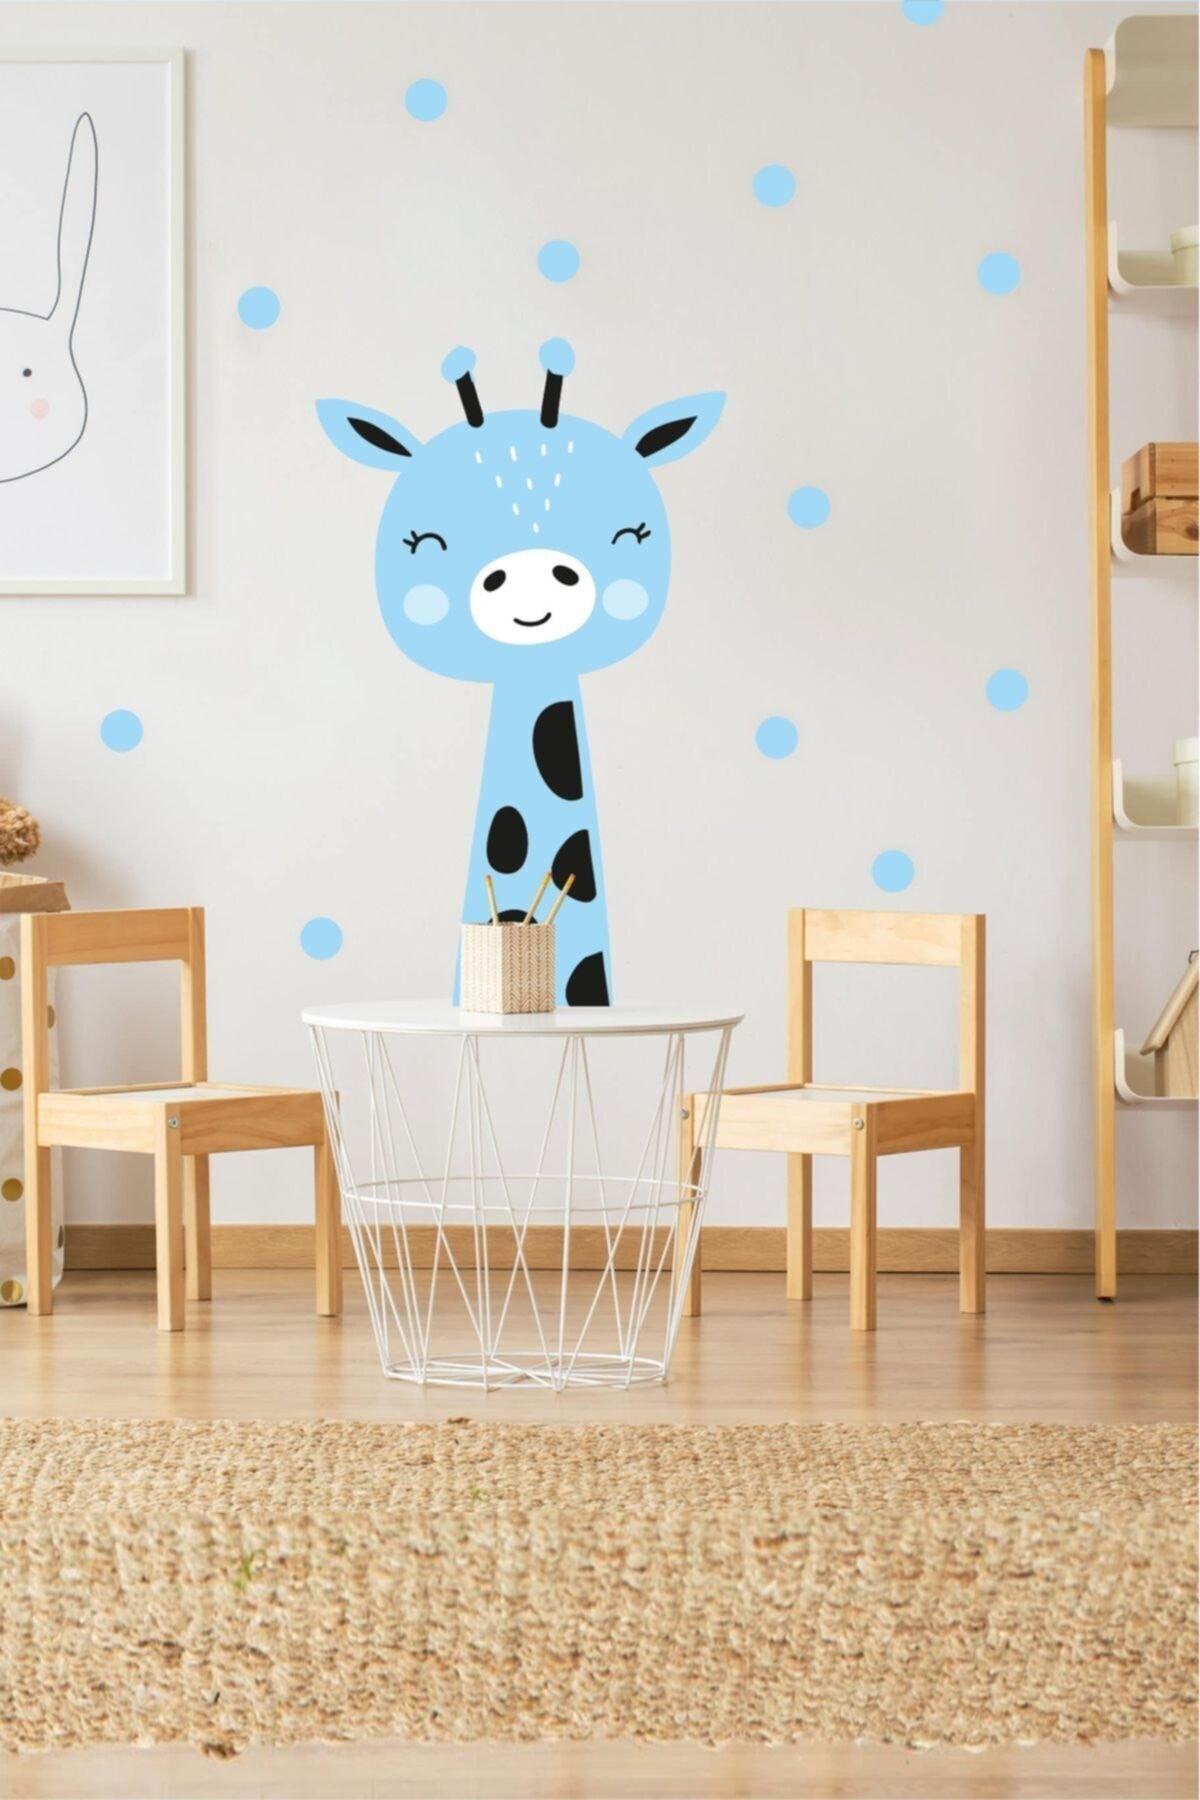 Blue Giraffe Patterned Kids Room Sticker - Swordslife